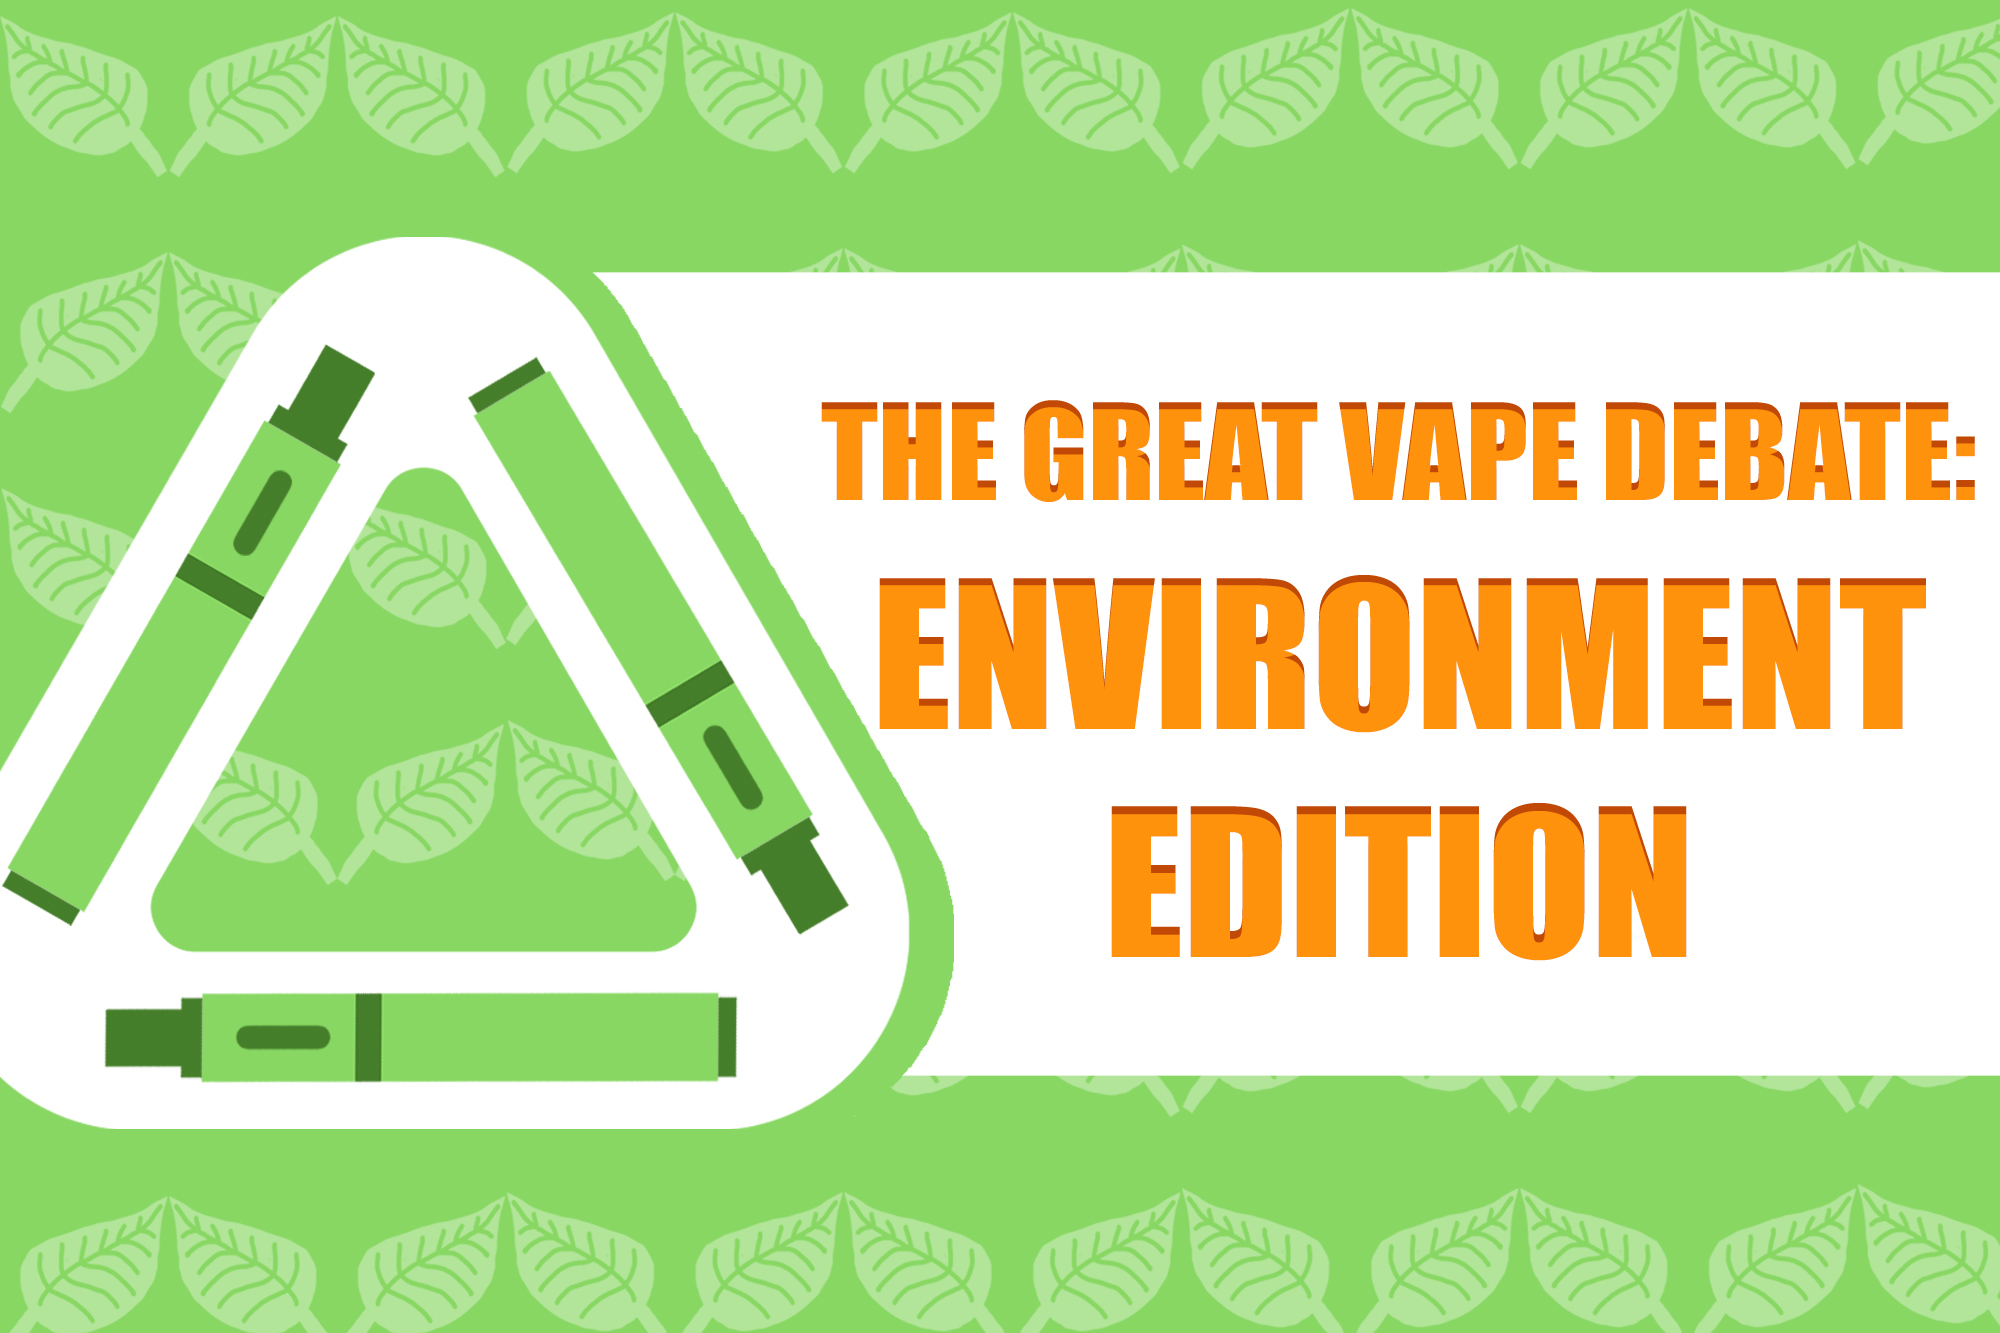 The Great Vape Debate: Environment Edition